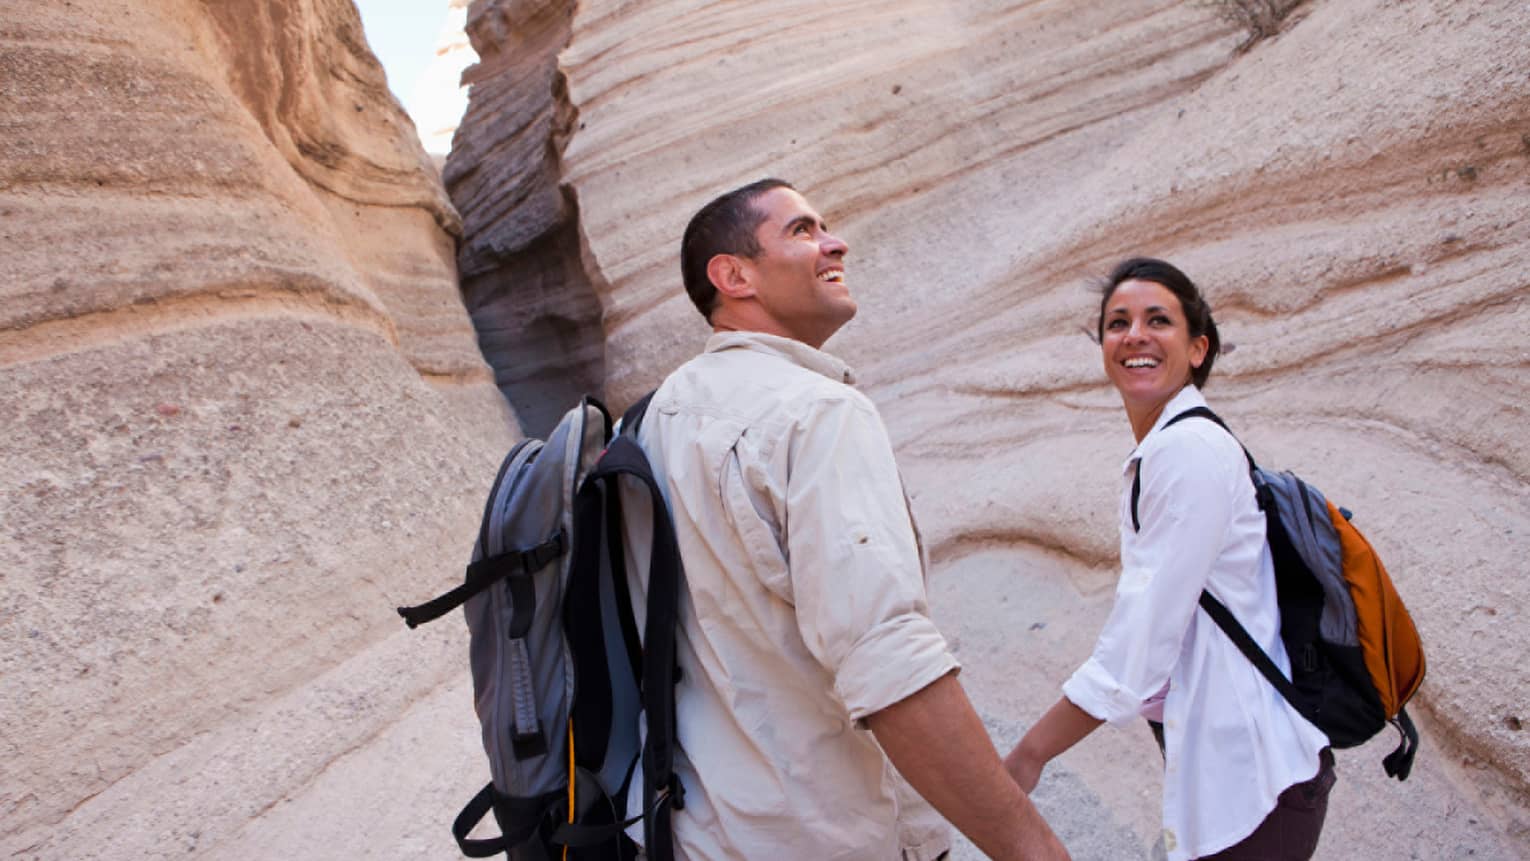 Smiling man and woman wearing backpacks hold hands, walk through desert rocks